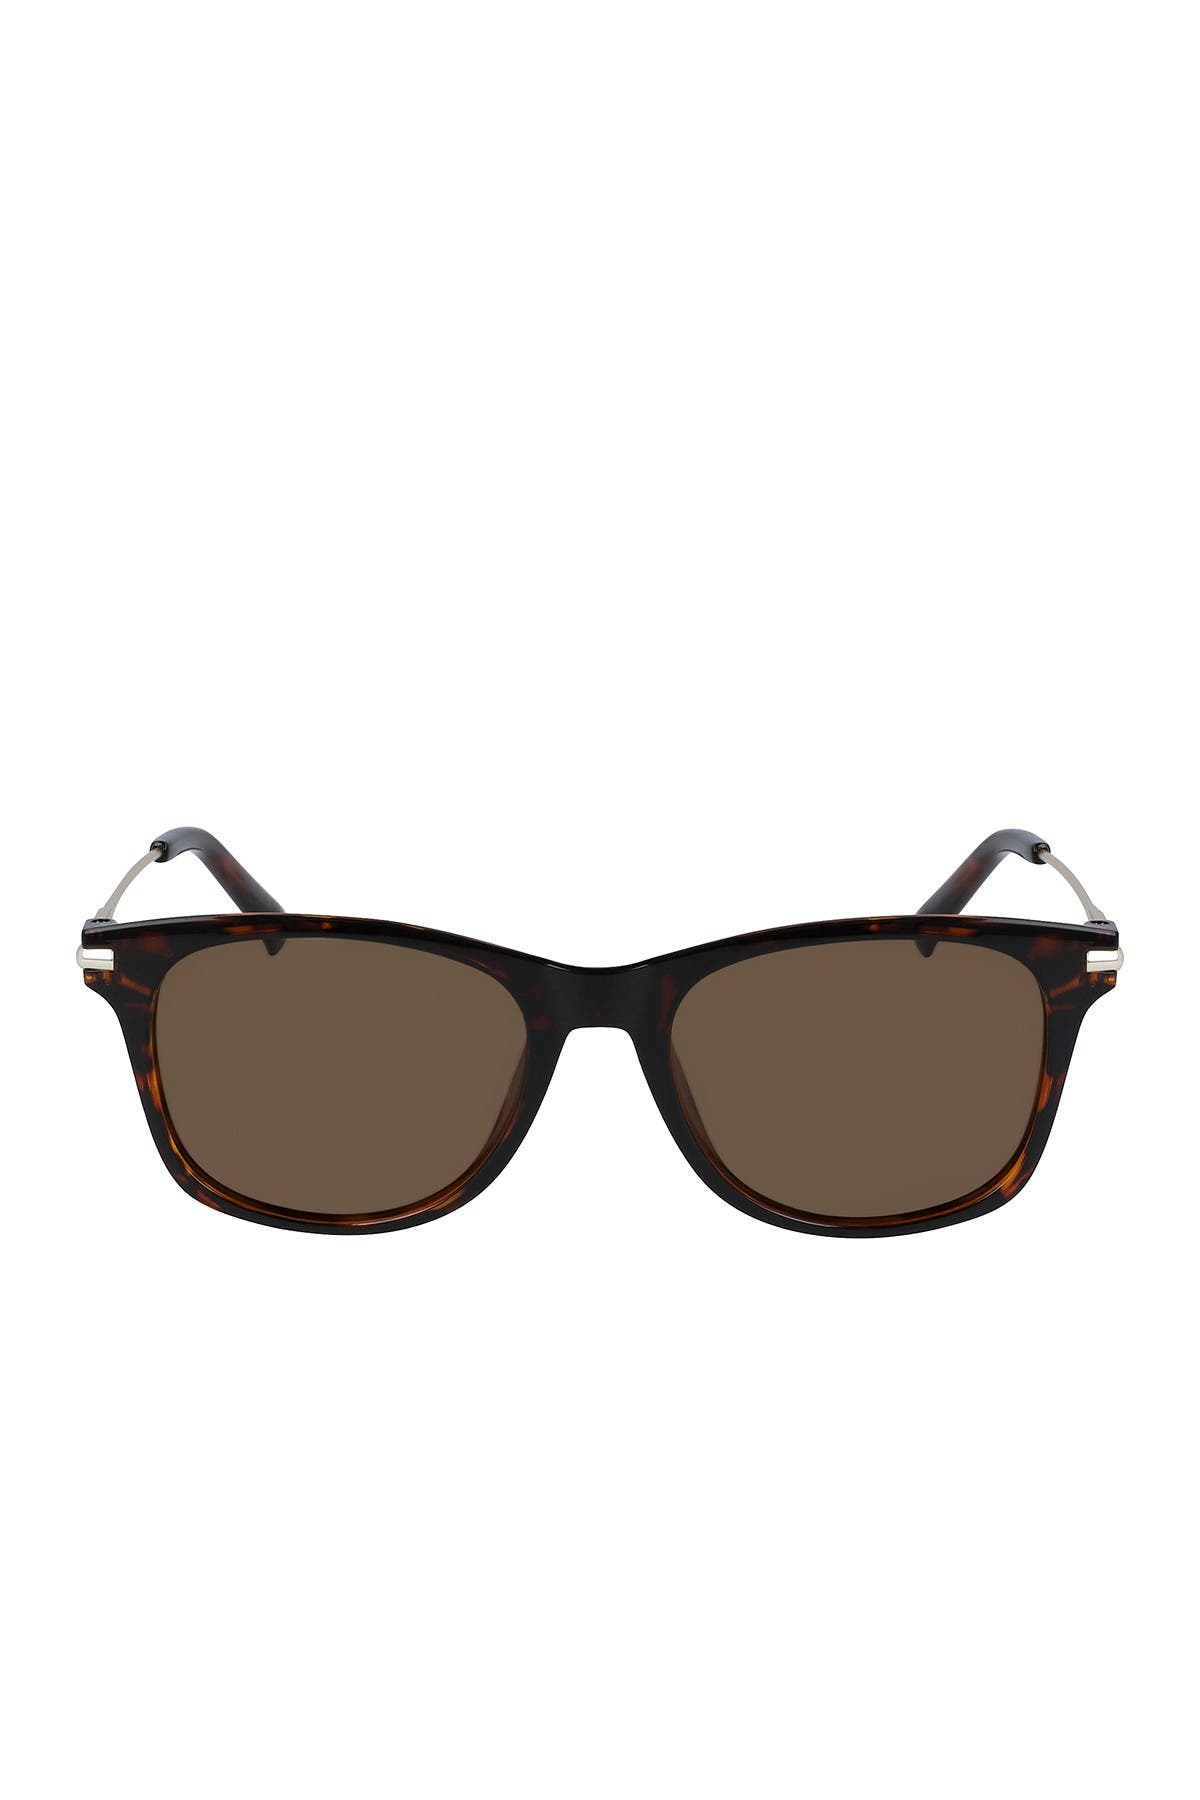 COLE HAAN 52mm Ultralight Square Sunglasses | Nordstromrack